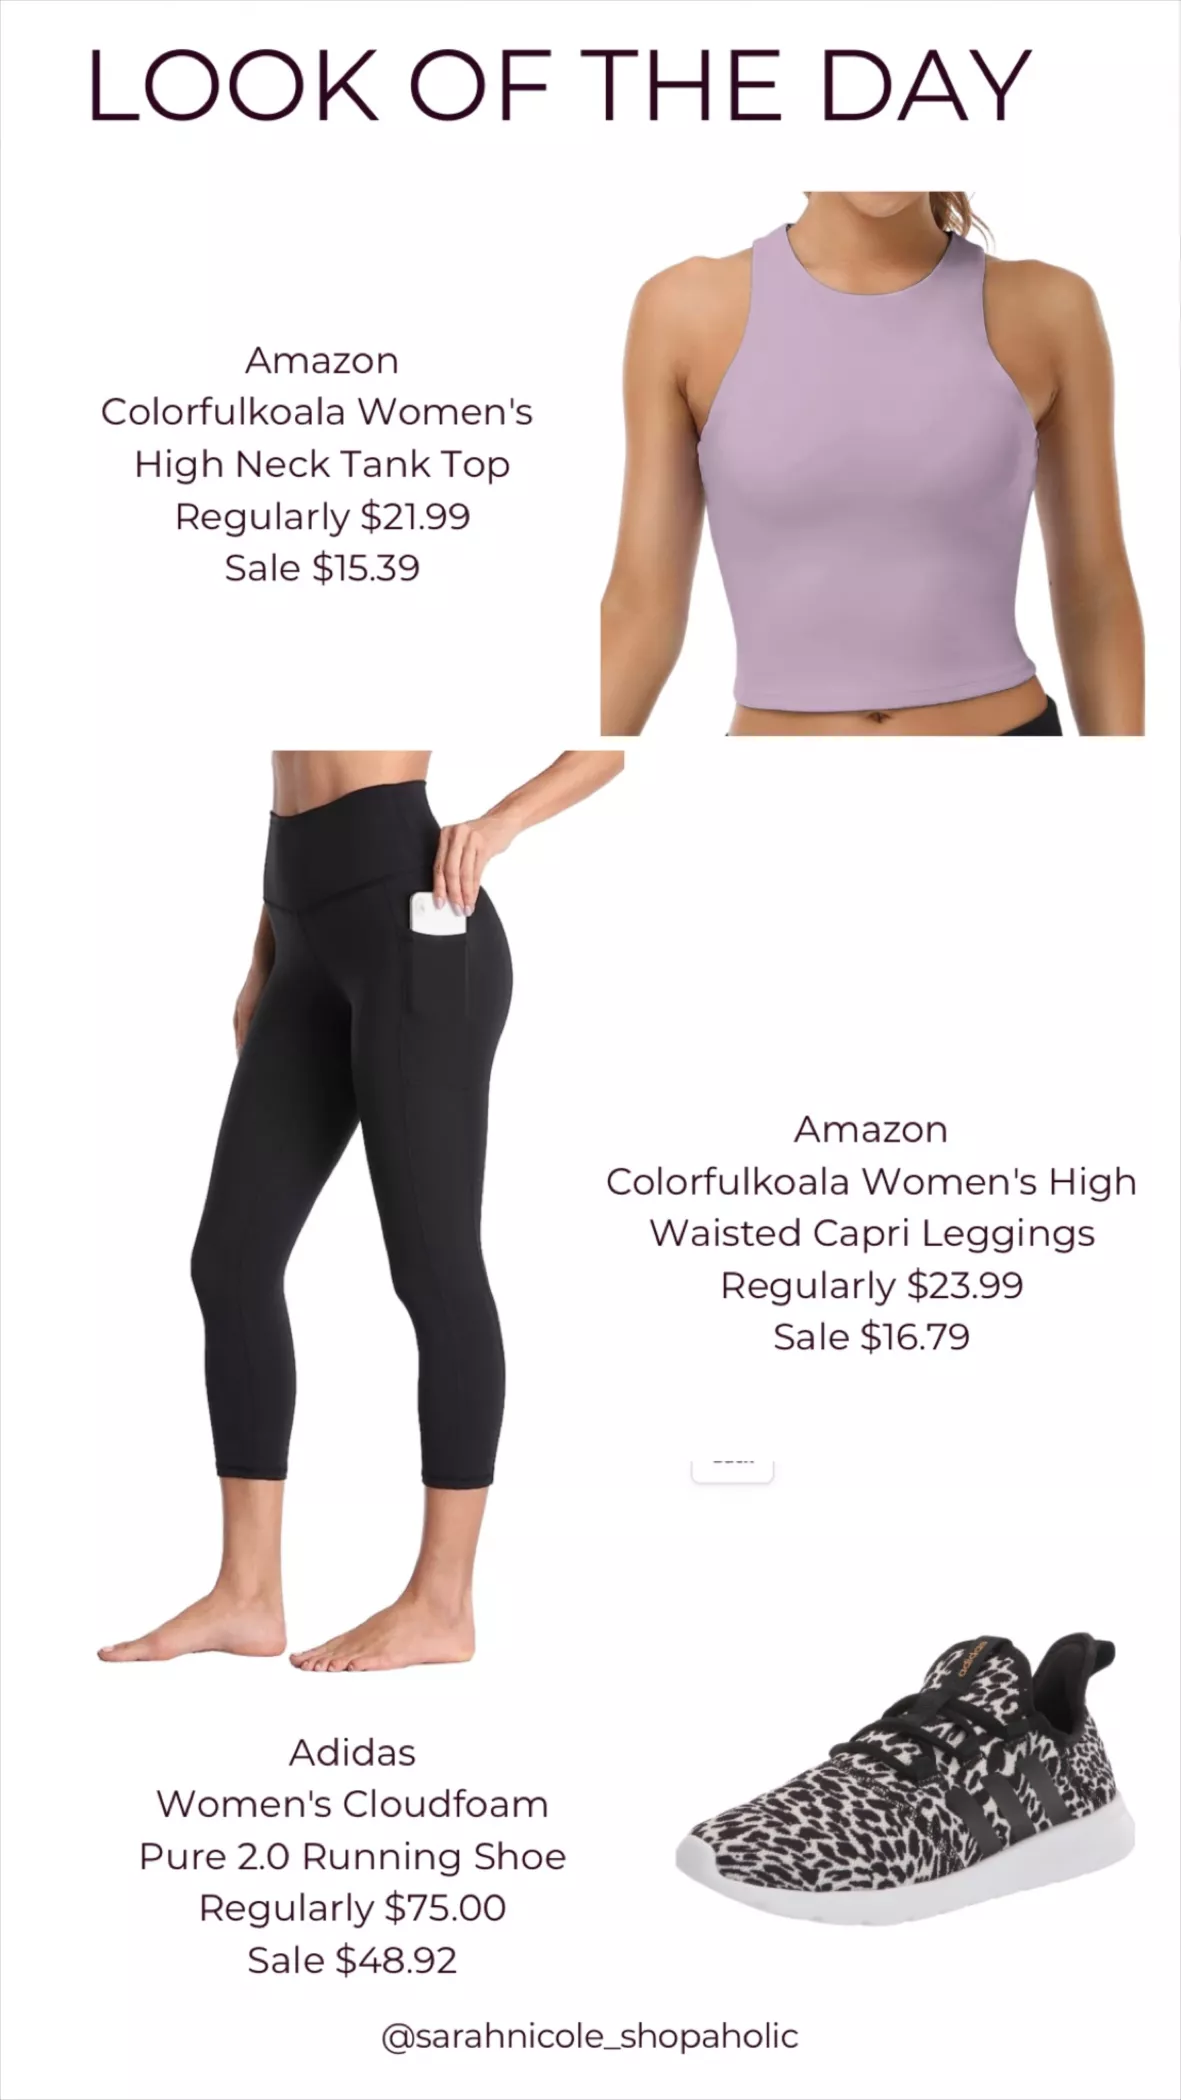 Colorfulkoala Women's High Neck Tank Tops Body Contour Sleeveless Crop  Double Lined Yoga Shirts